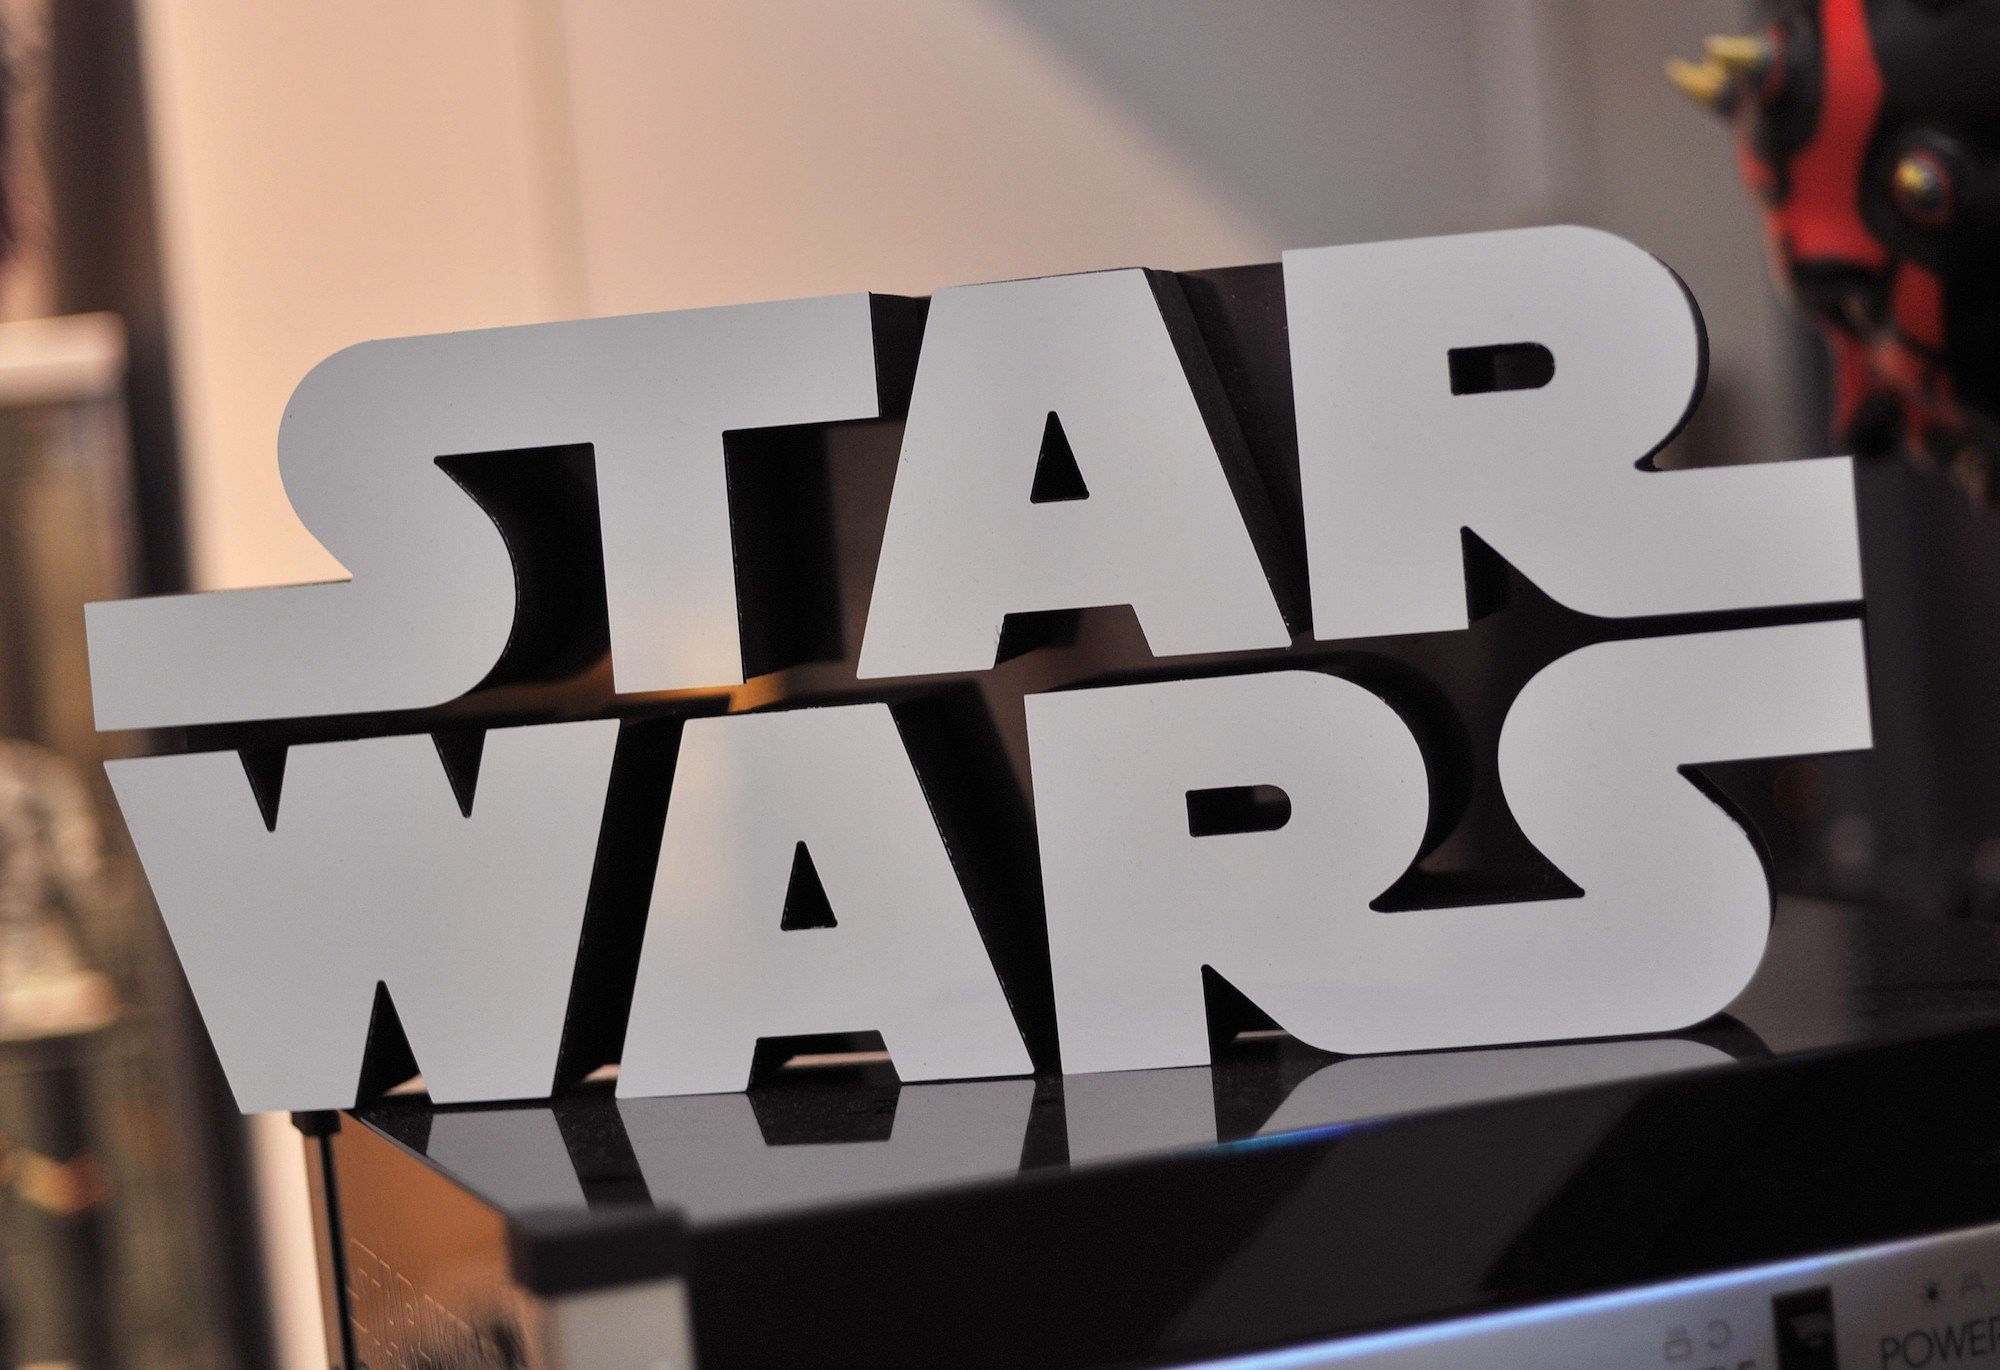 A Star Wars logo sign inside Rancho Obi-Wan, the world's largest private collection of Star Wars memorabilia, in Petaluma, California on November 24, 2015 